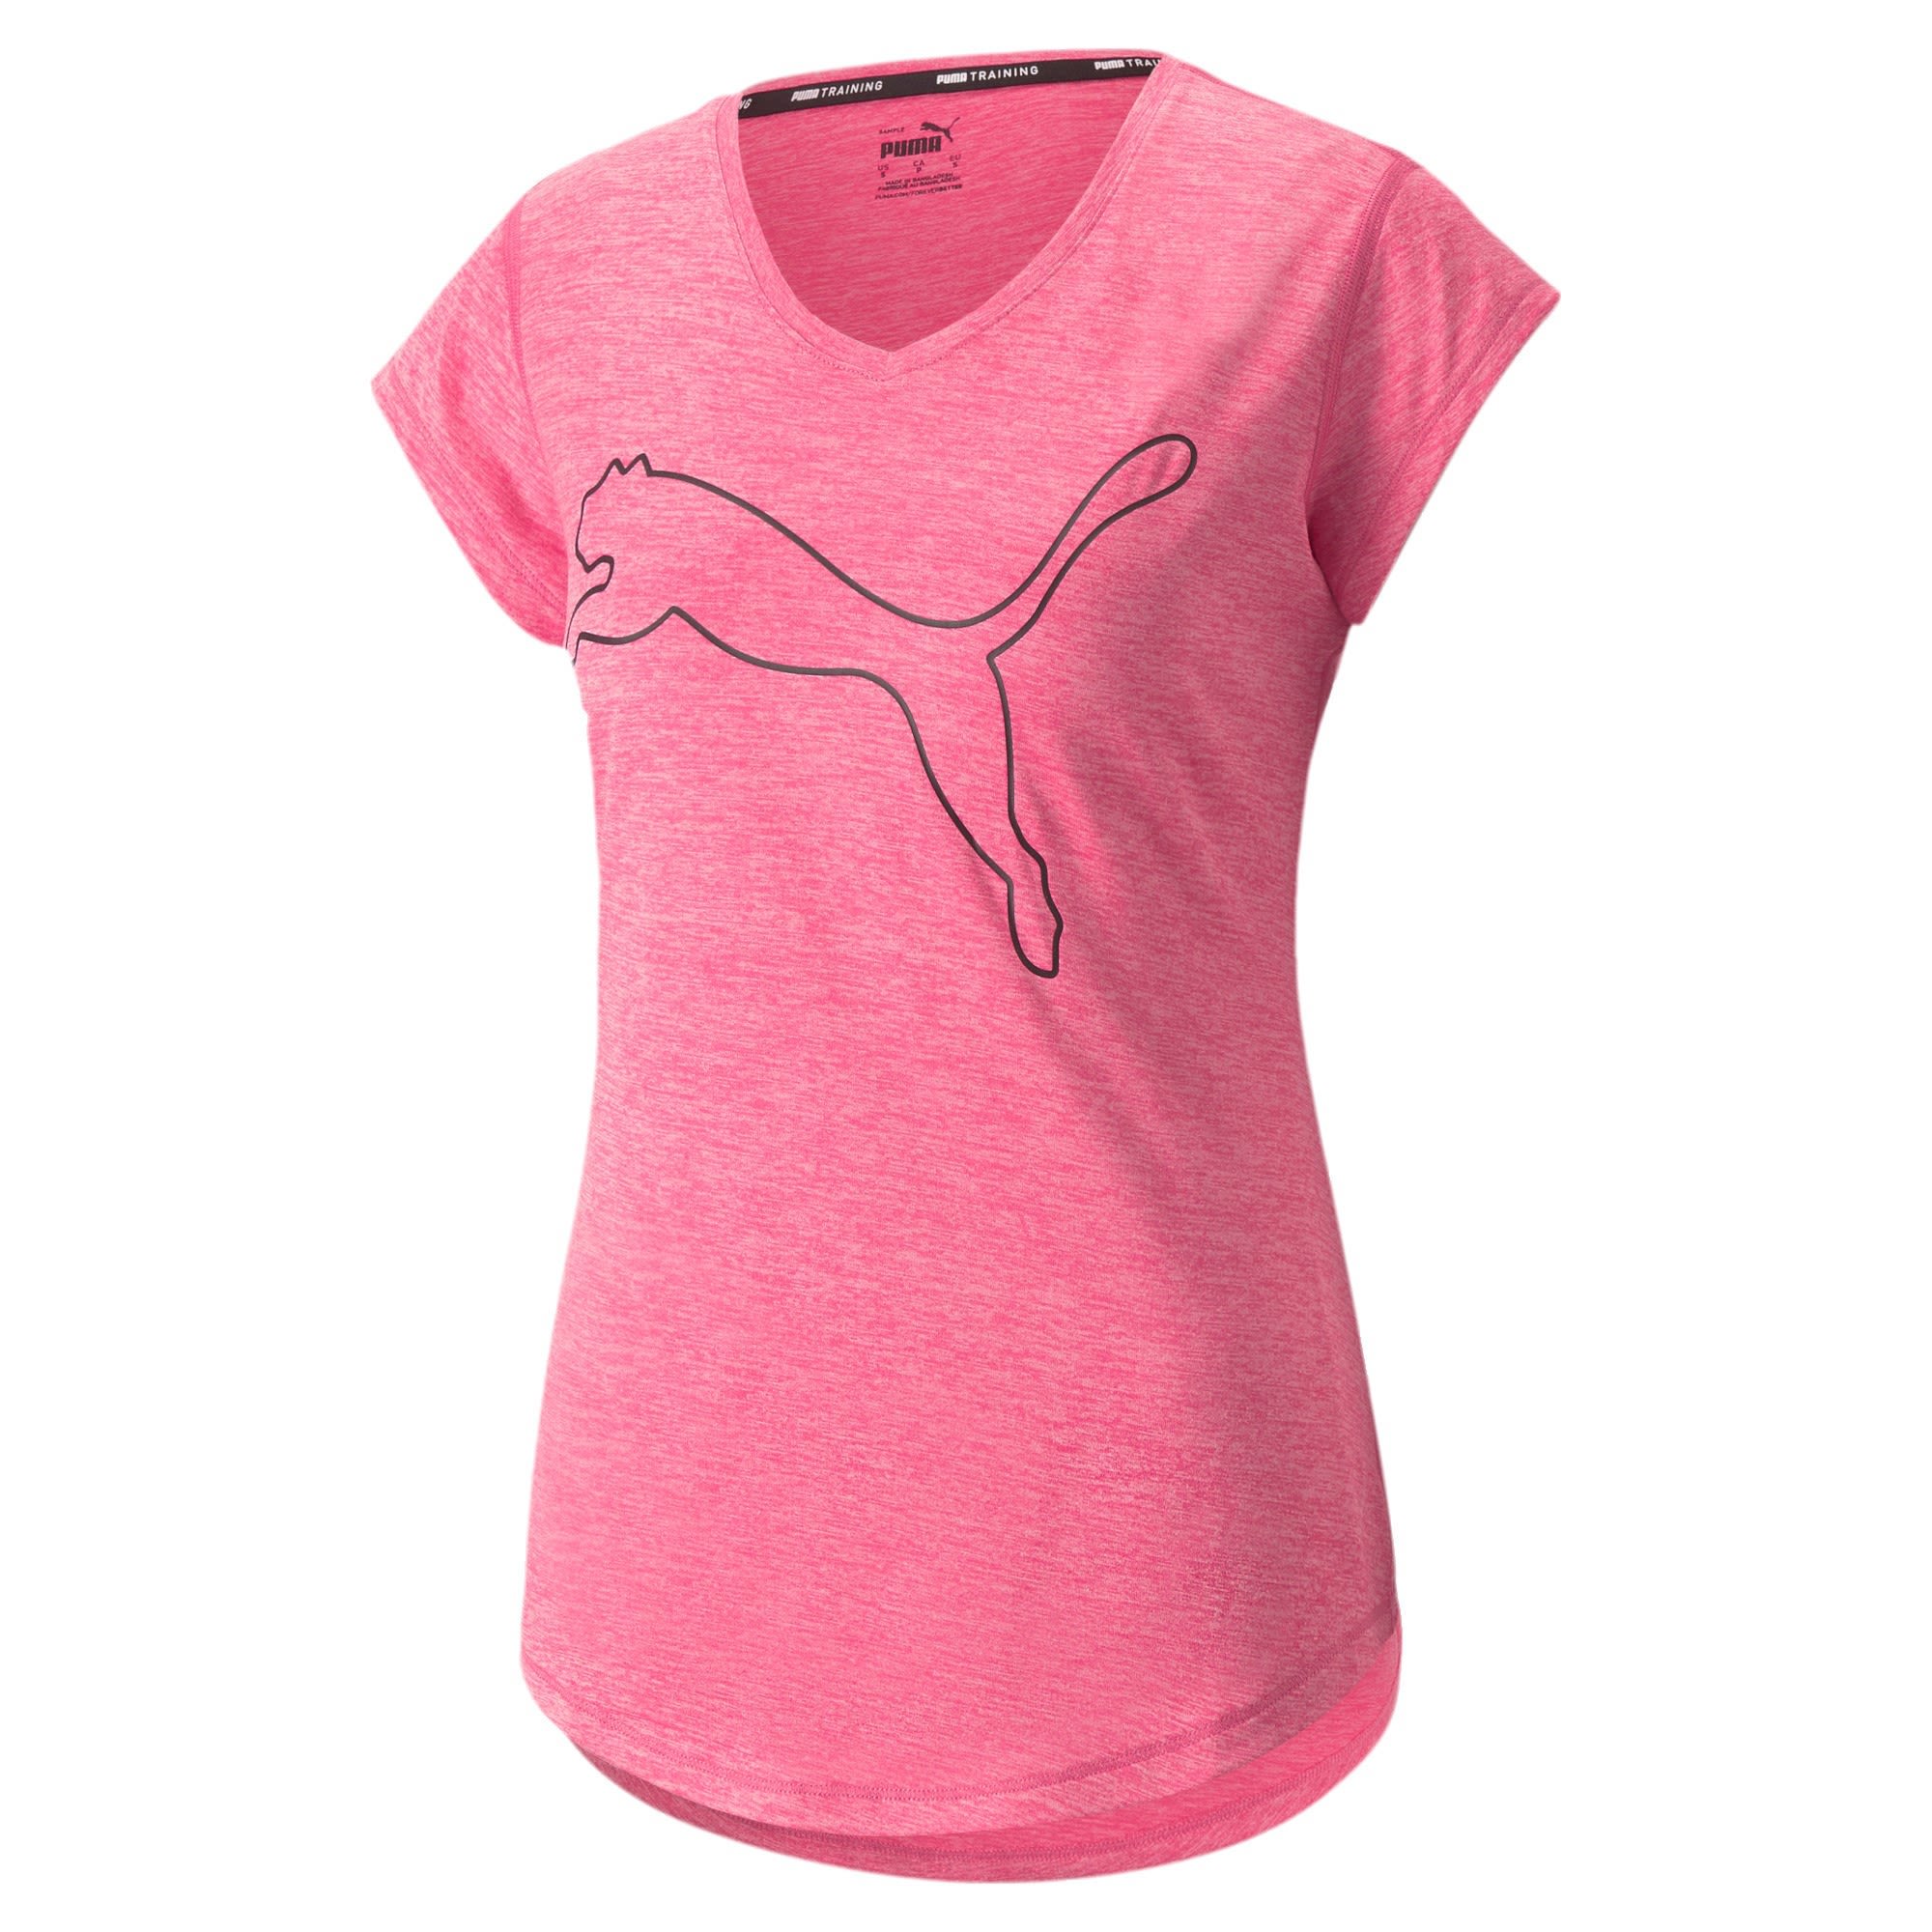 Puma Train Favorite Heather CAT Tee Pink- Female Kurzarm-Shirts- Grsse XL - Farbe Sunset Pink Heather - Outline Cat